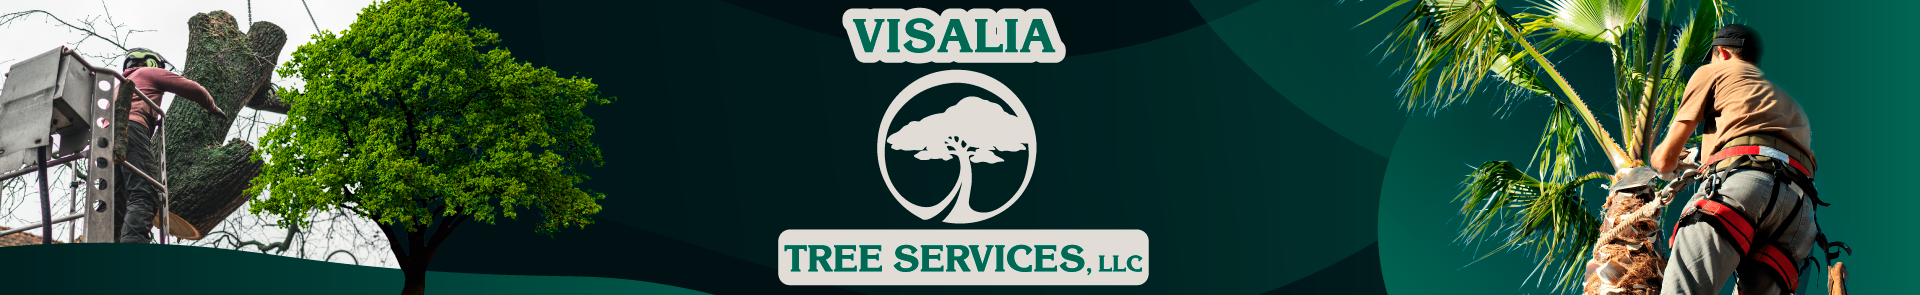 Visalia Tree Services, LLC - Header